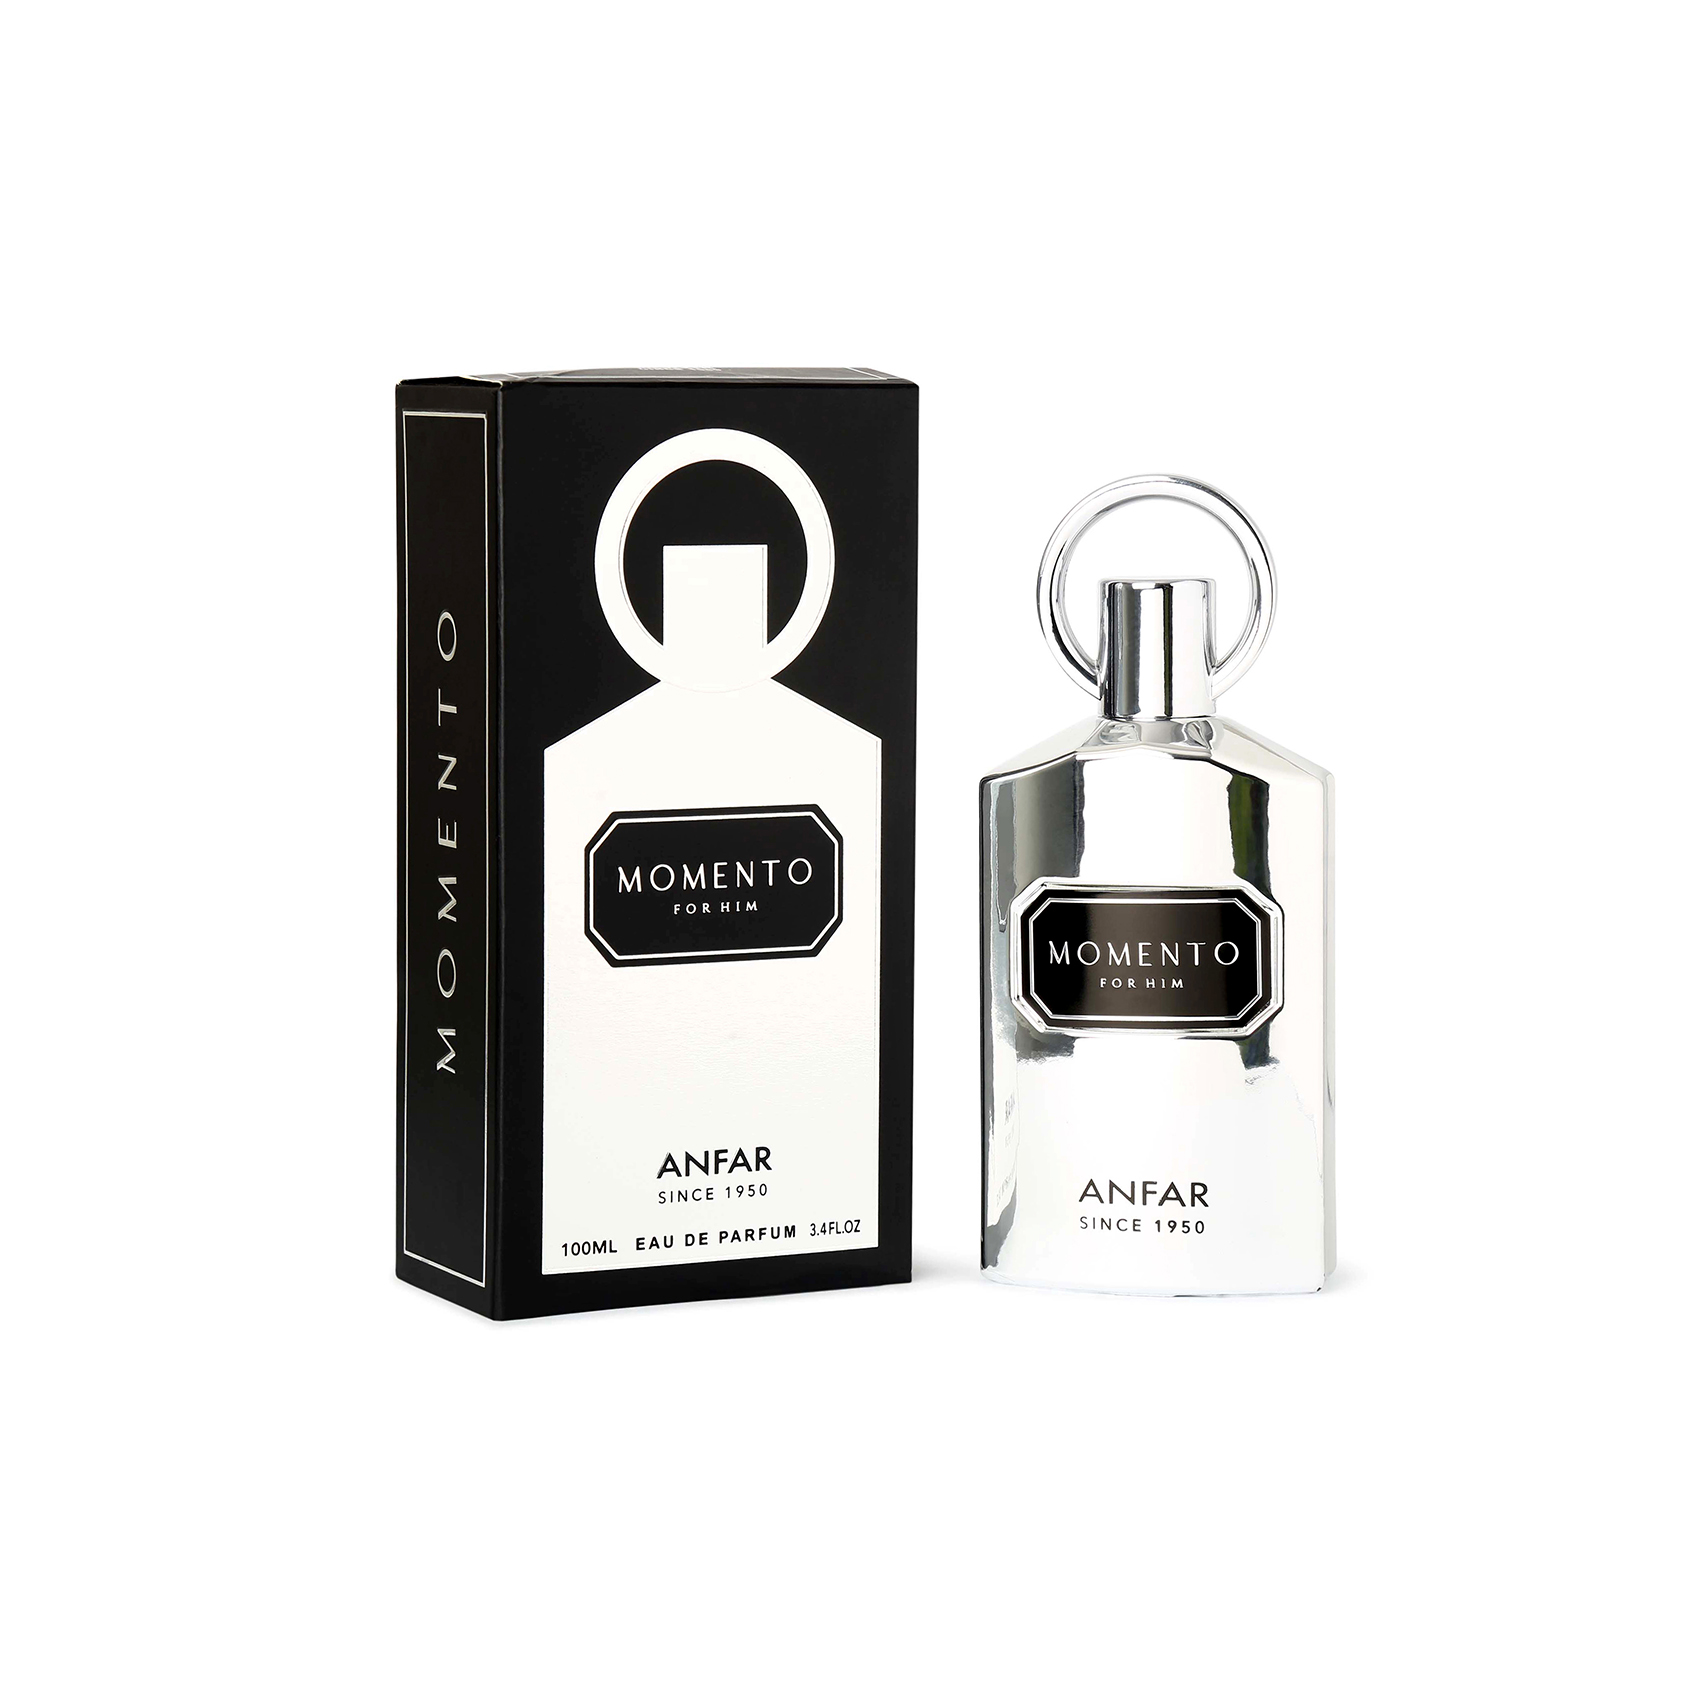 Momento For Him Eau De Parfum 100ml Perfume  By Anfar- Made In India